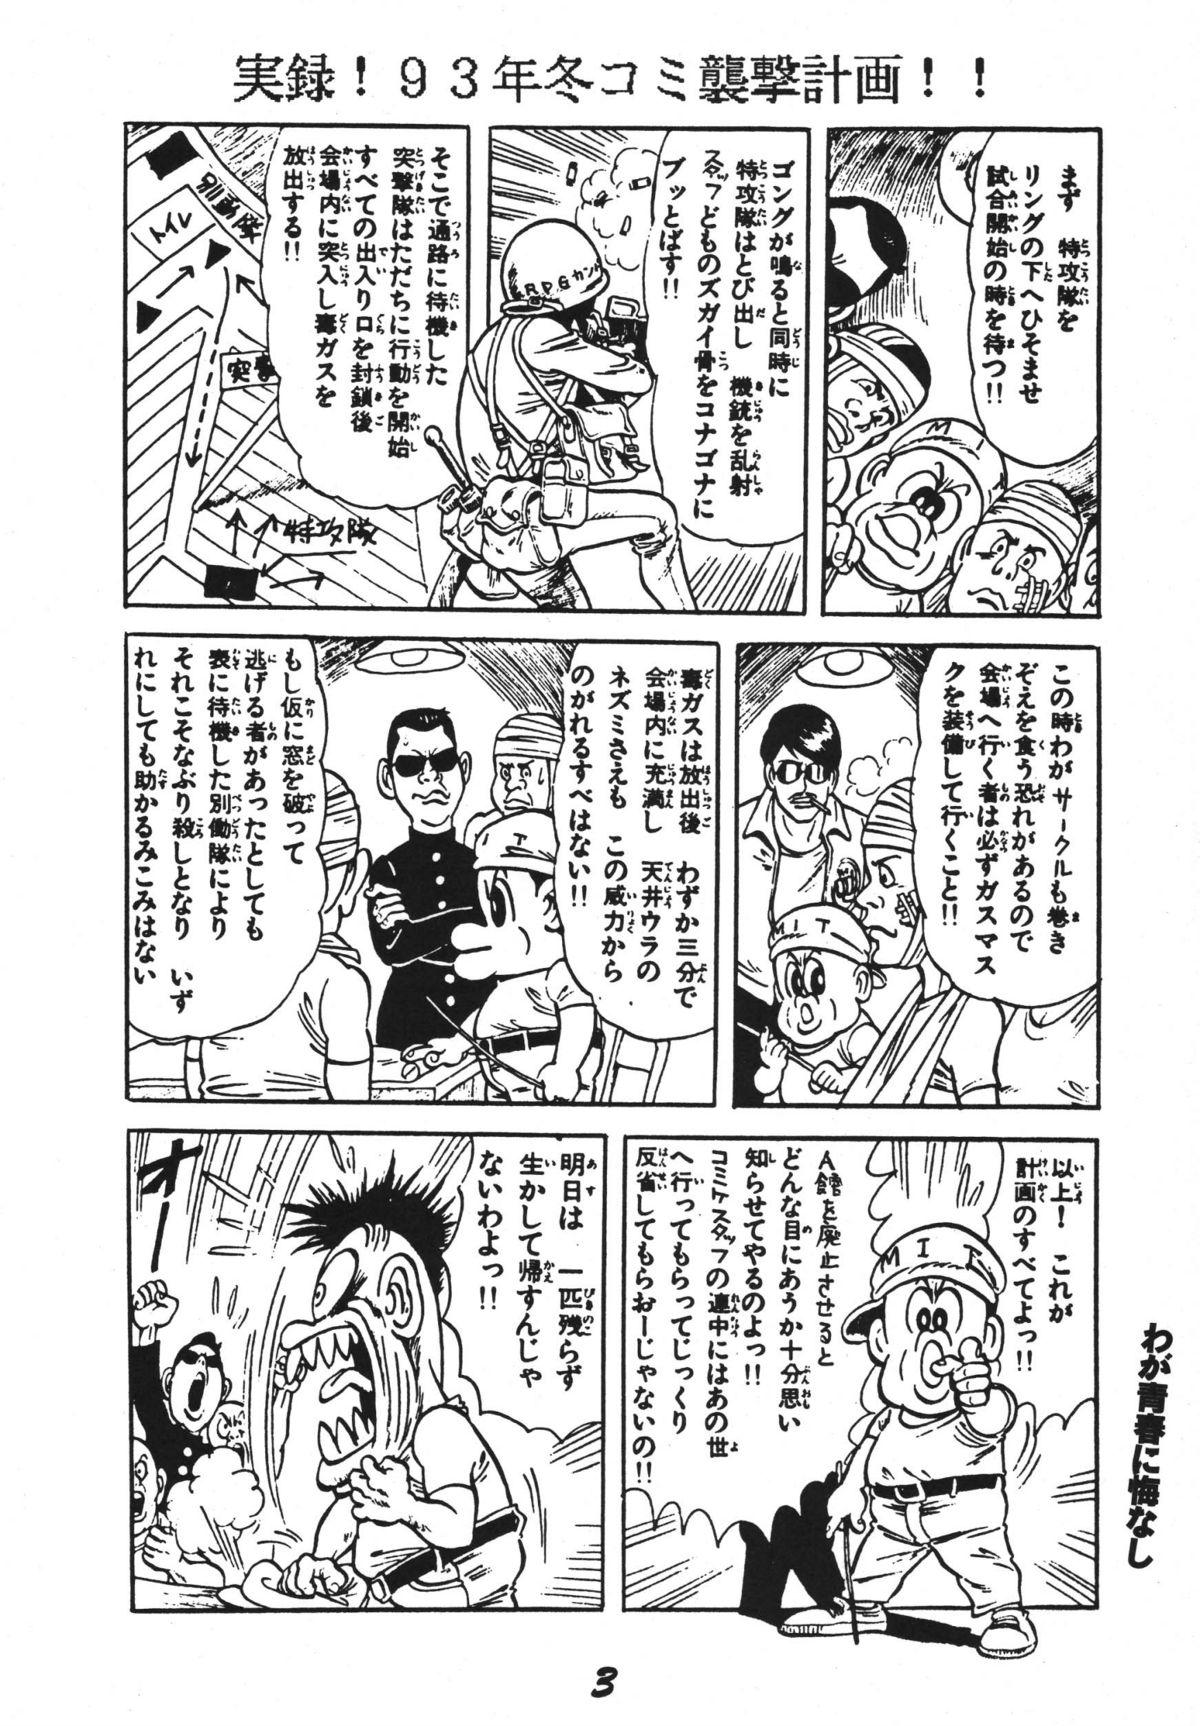 Amature Porn Koi no Arashi - Sailor moon Street fighter Samurai spirits Brave express might gaine Twinbee Rico - Page 3